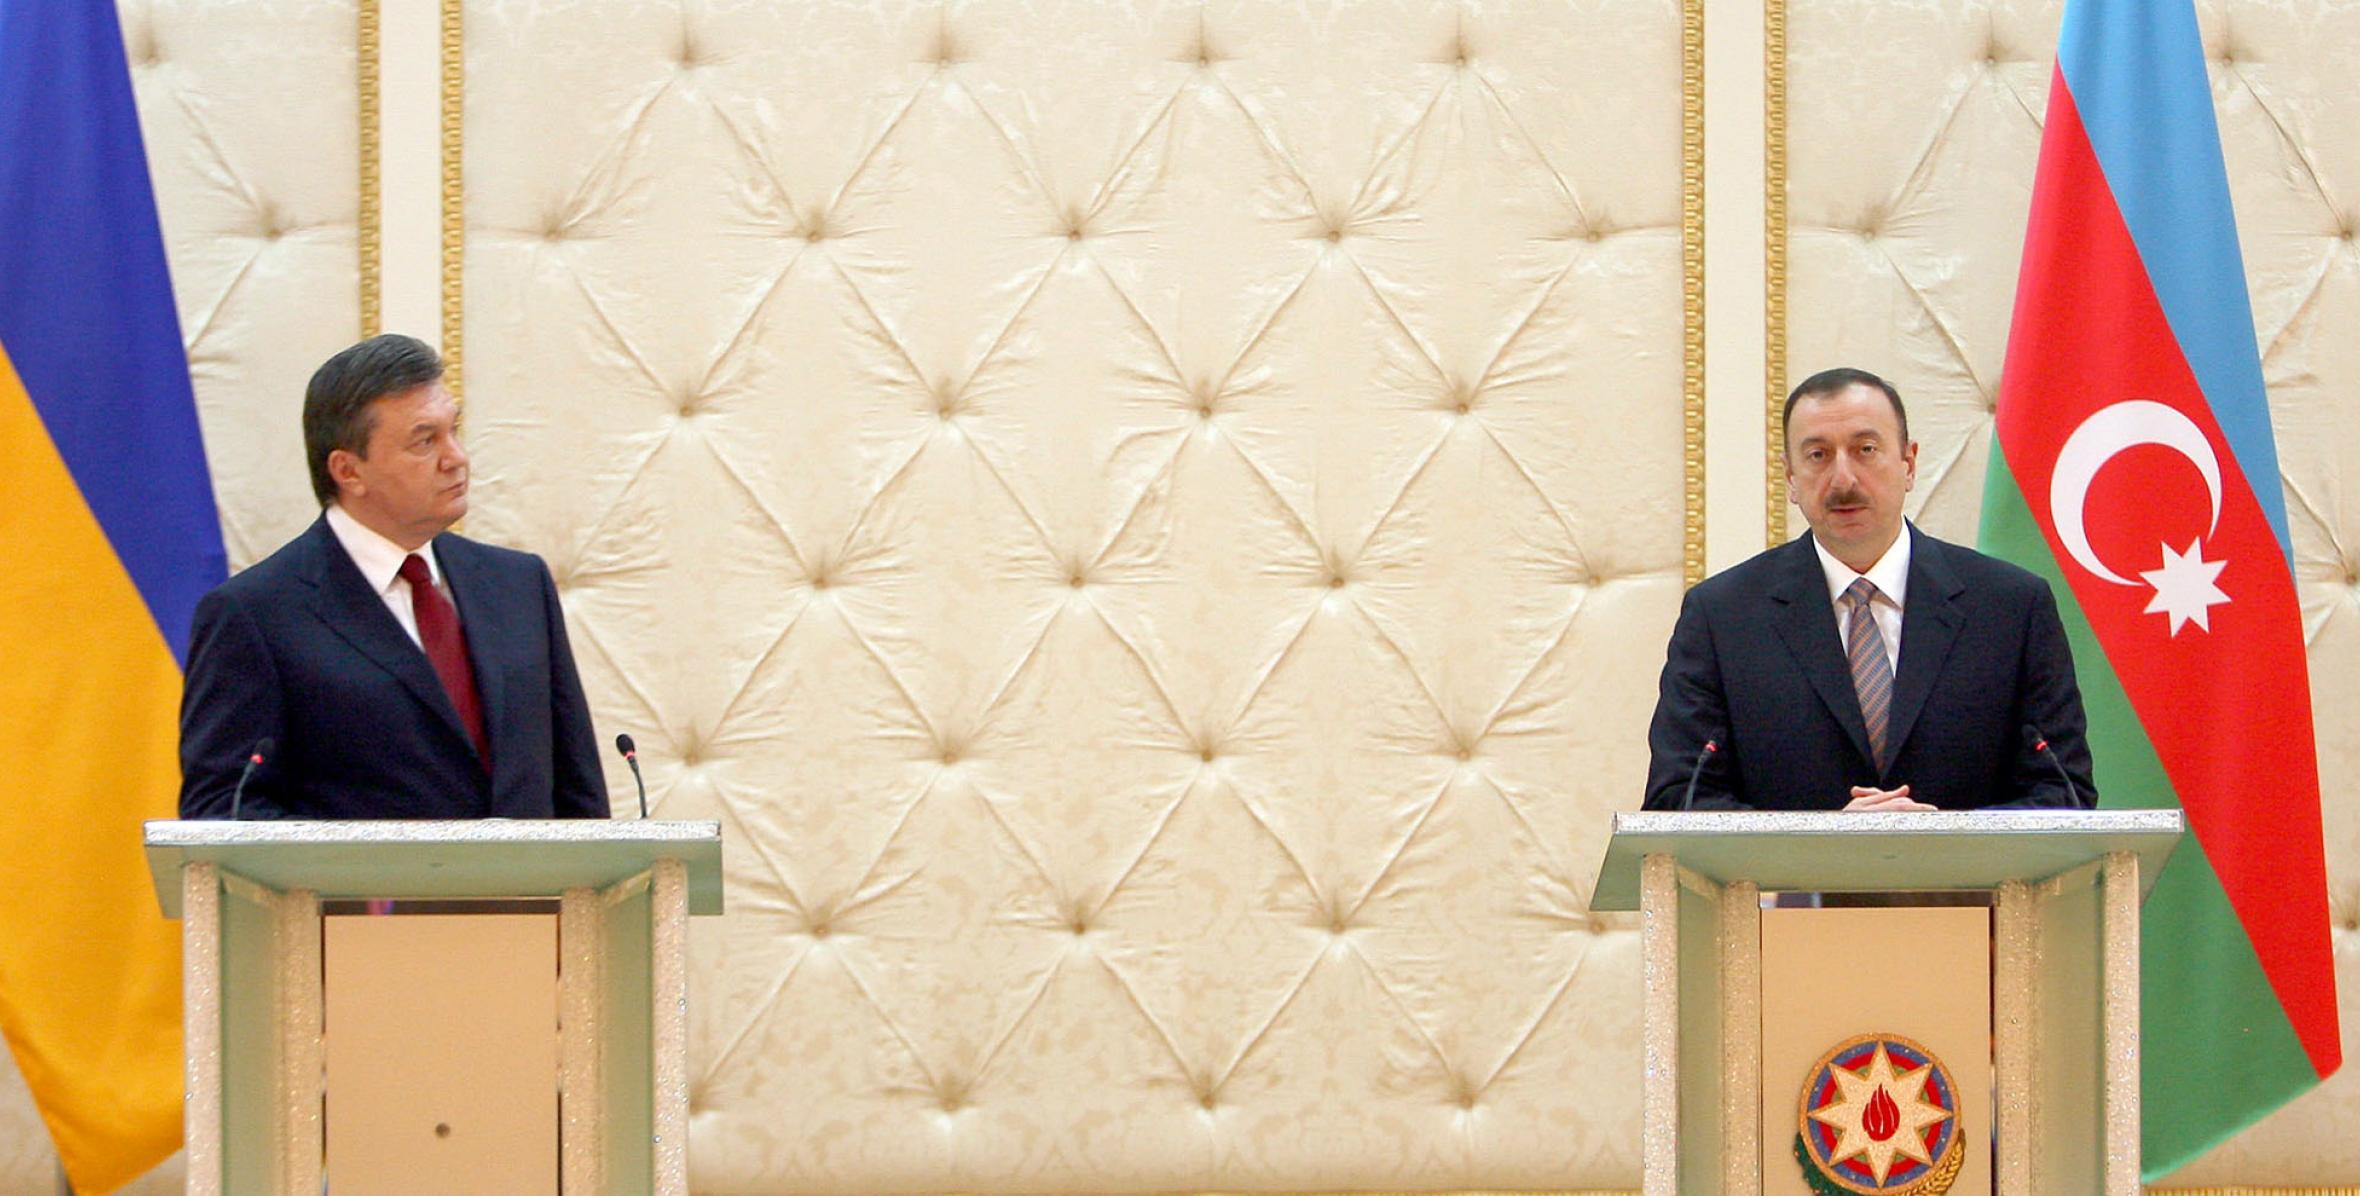 Azerbaijan and Ukrainian Presidents held a joint press conference